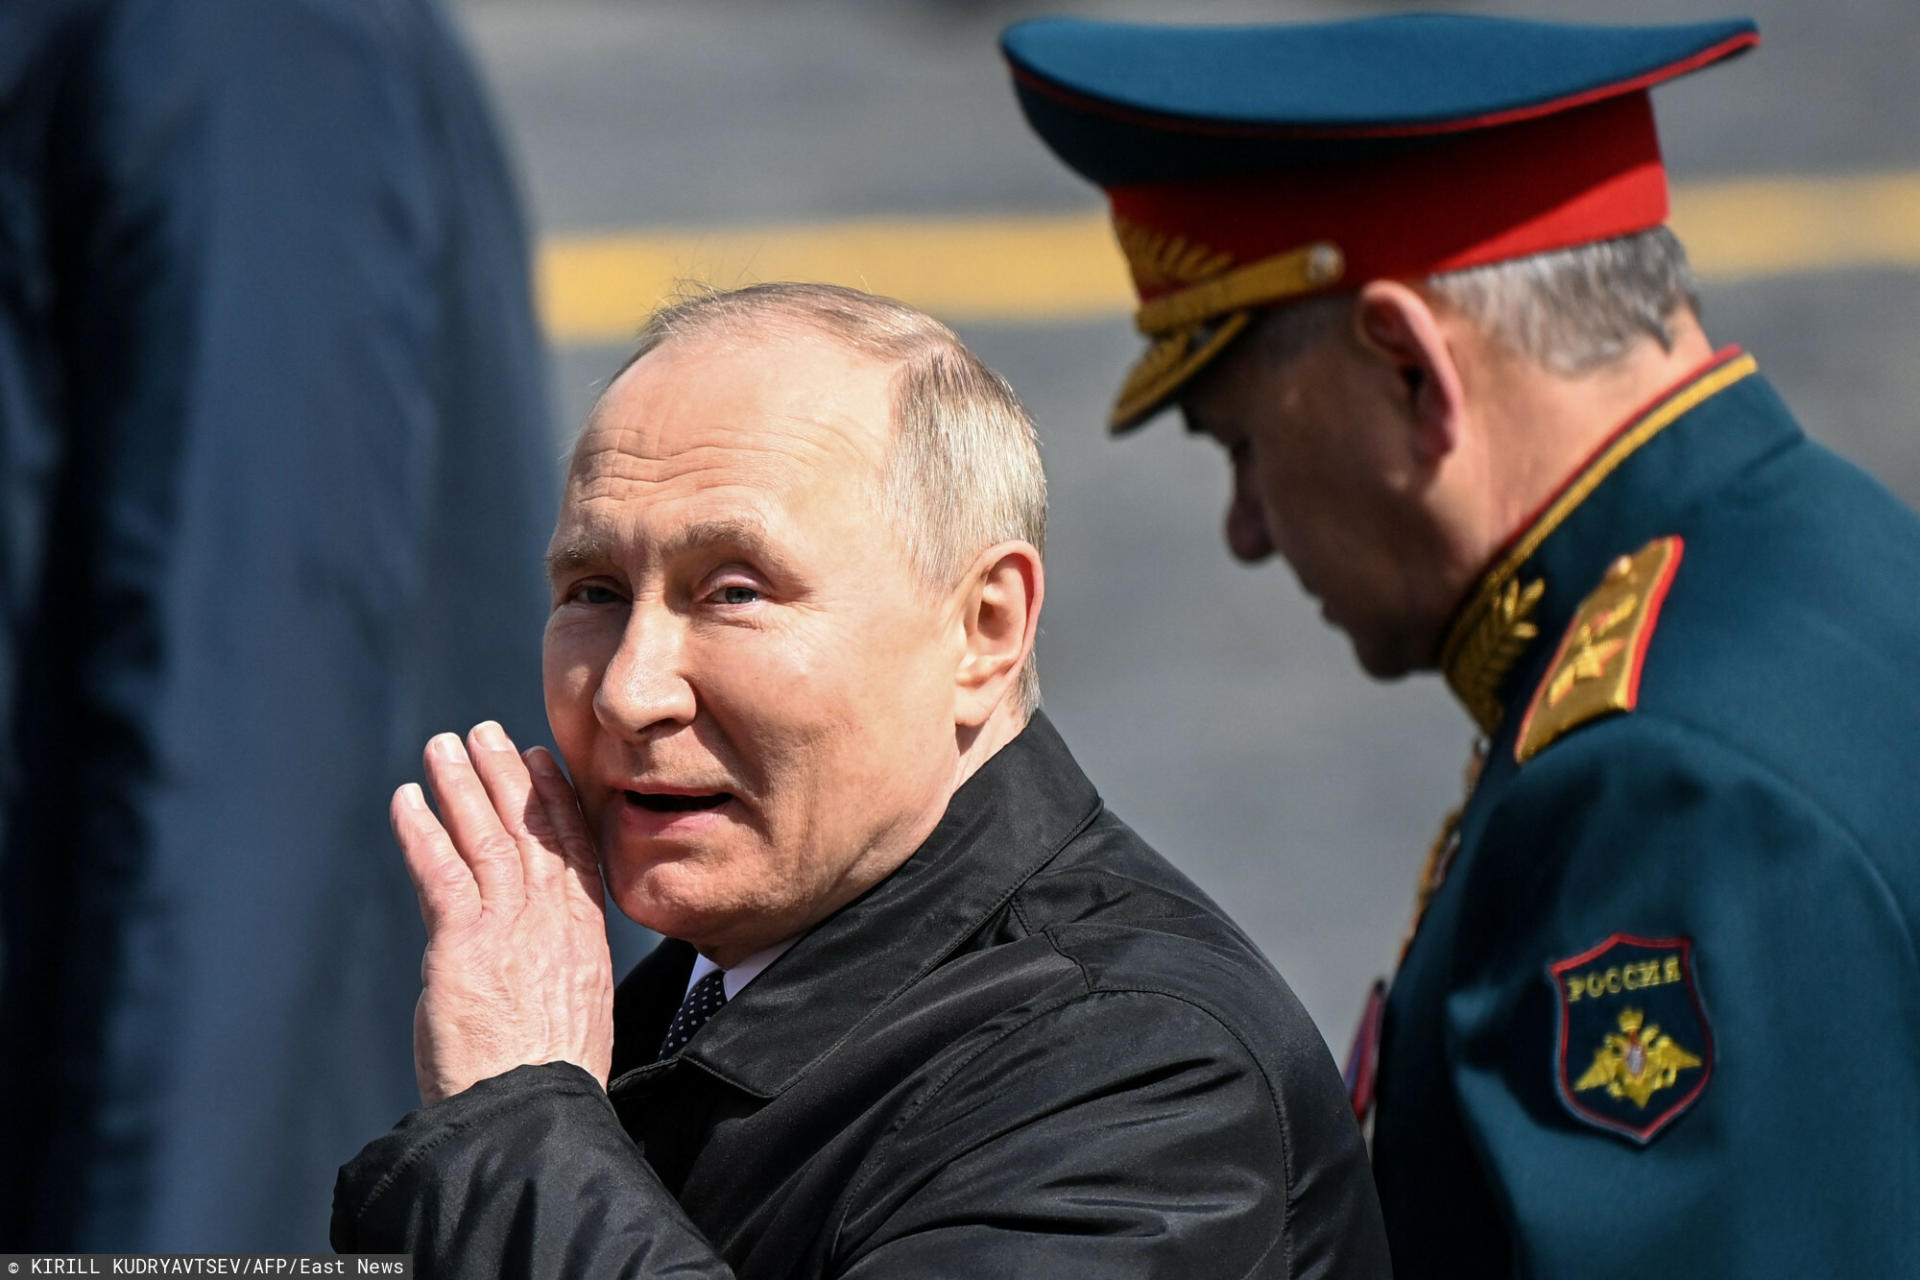 KIRILL KUDRYAVTSEV/AFP/East News